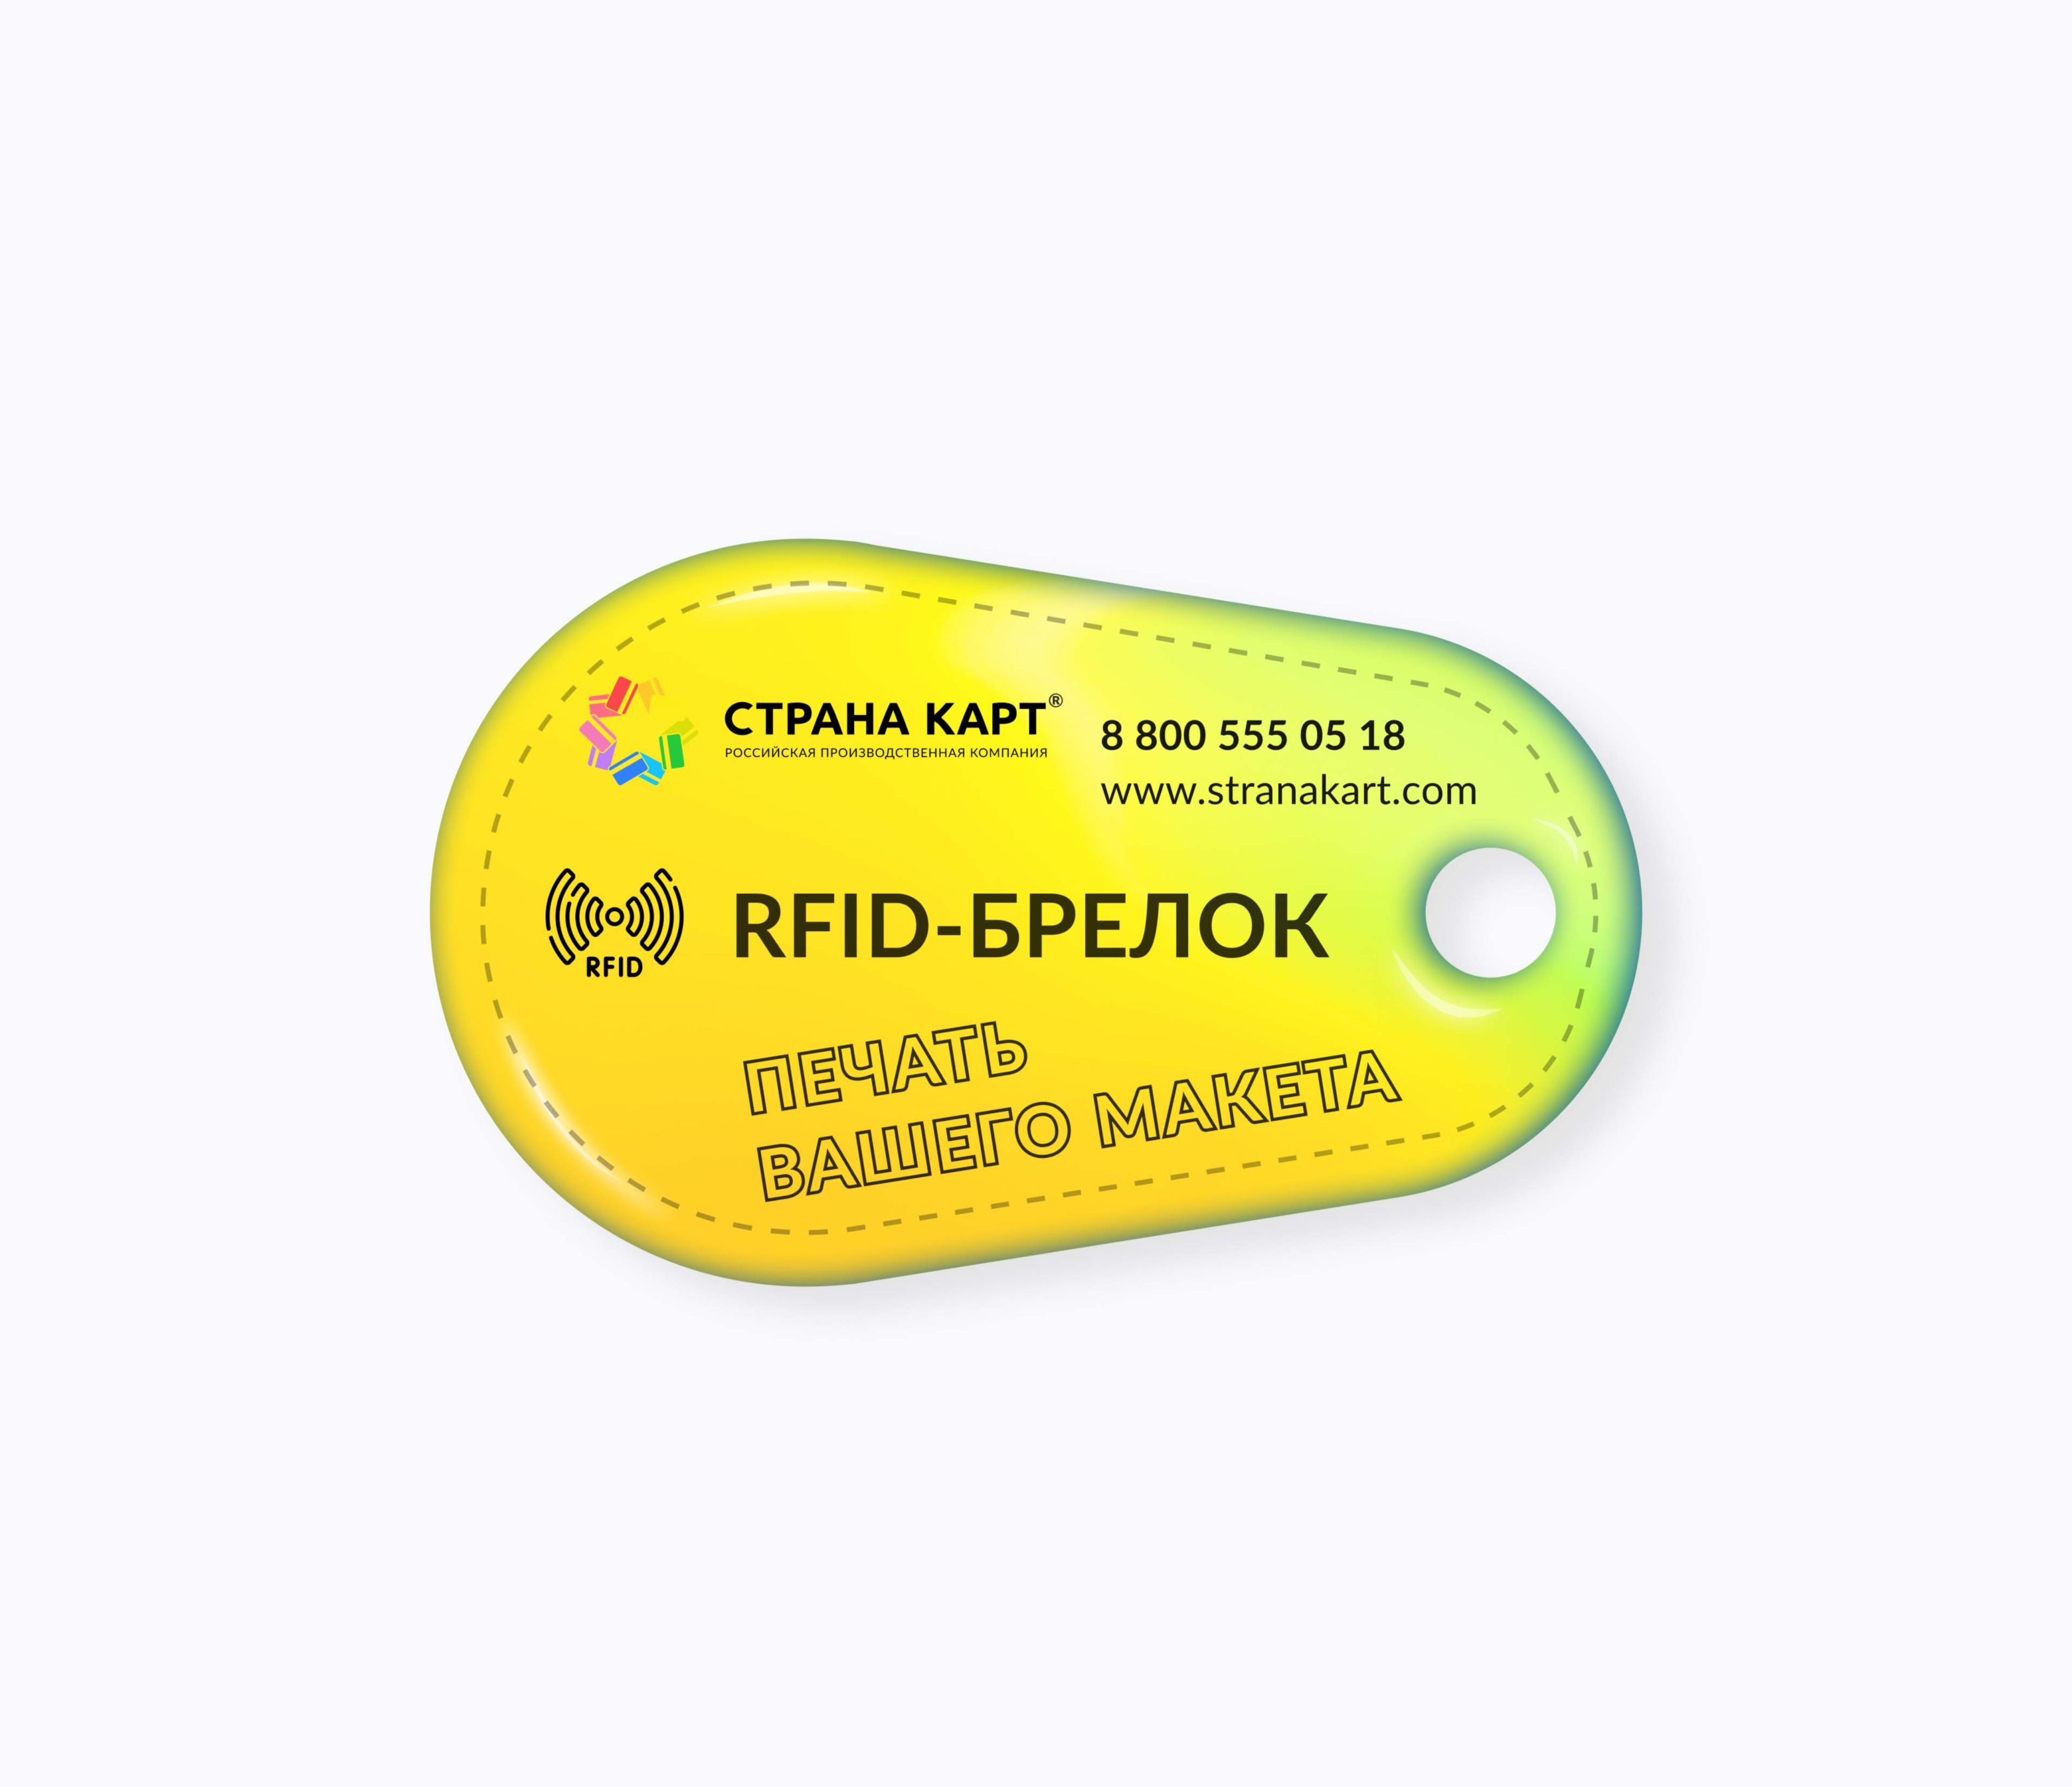 Каплевидные RFID-брелоки NEOKEY® с чипом для парков развлечений RFID-брелоки NEOKEY® с чипом для парков развлечений